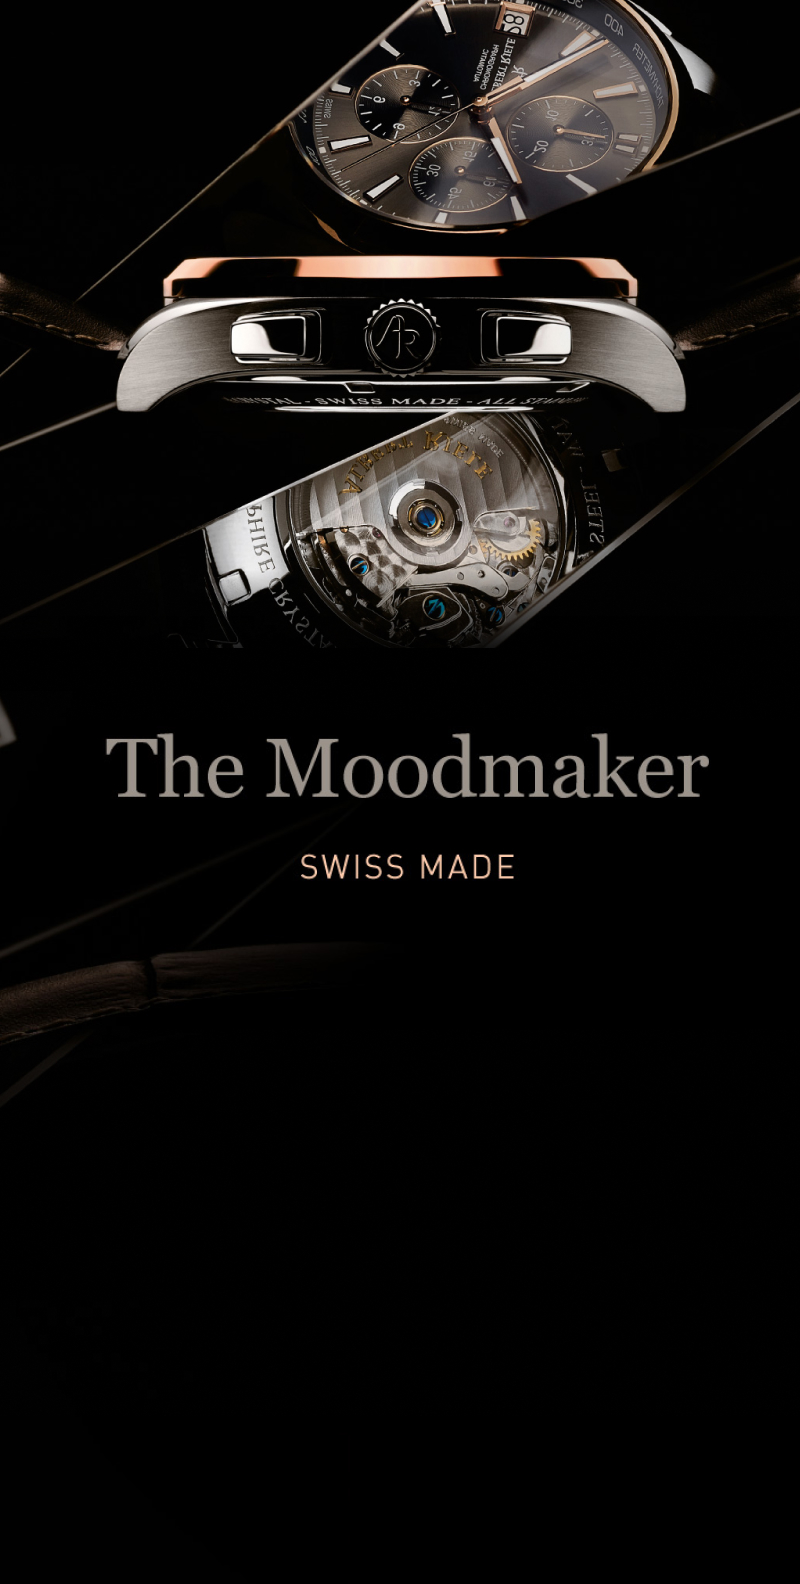 The Moodmaker